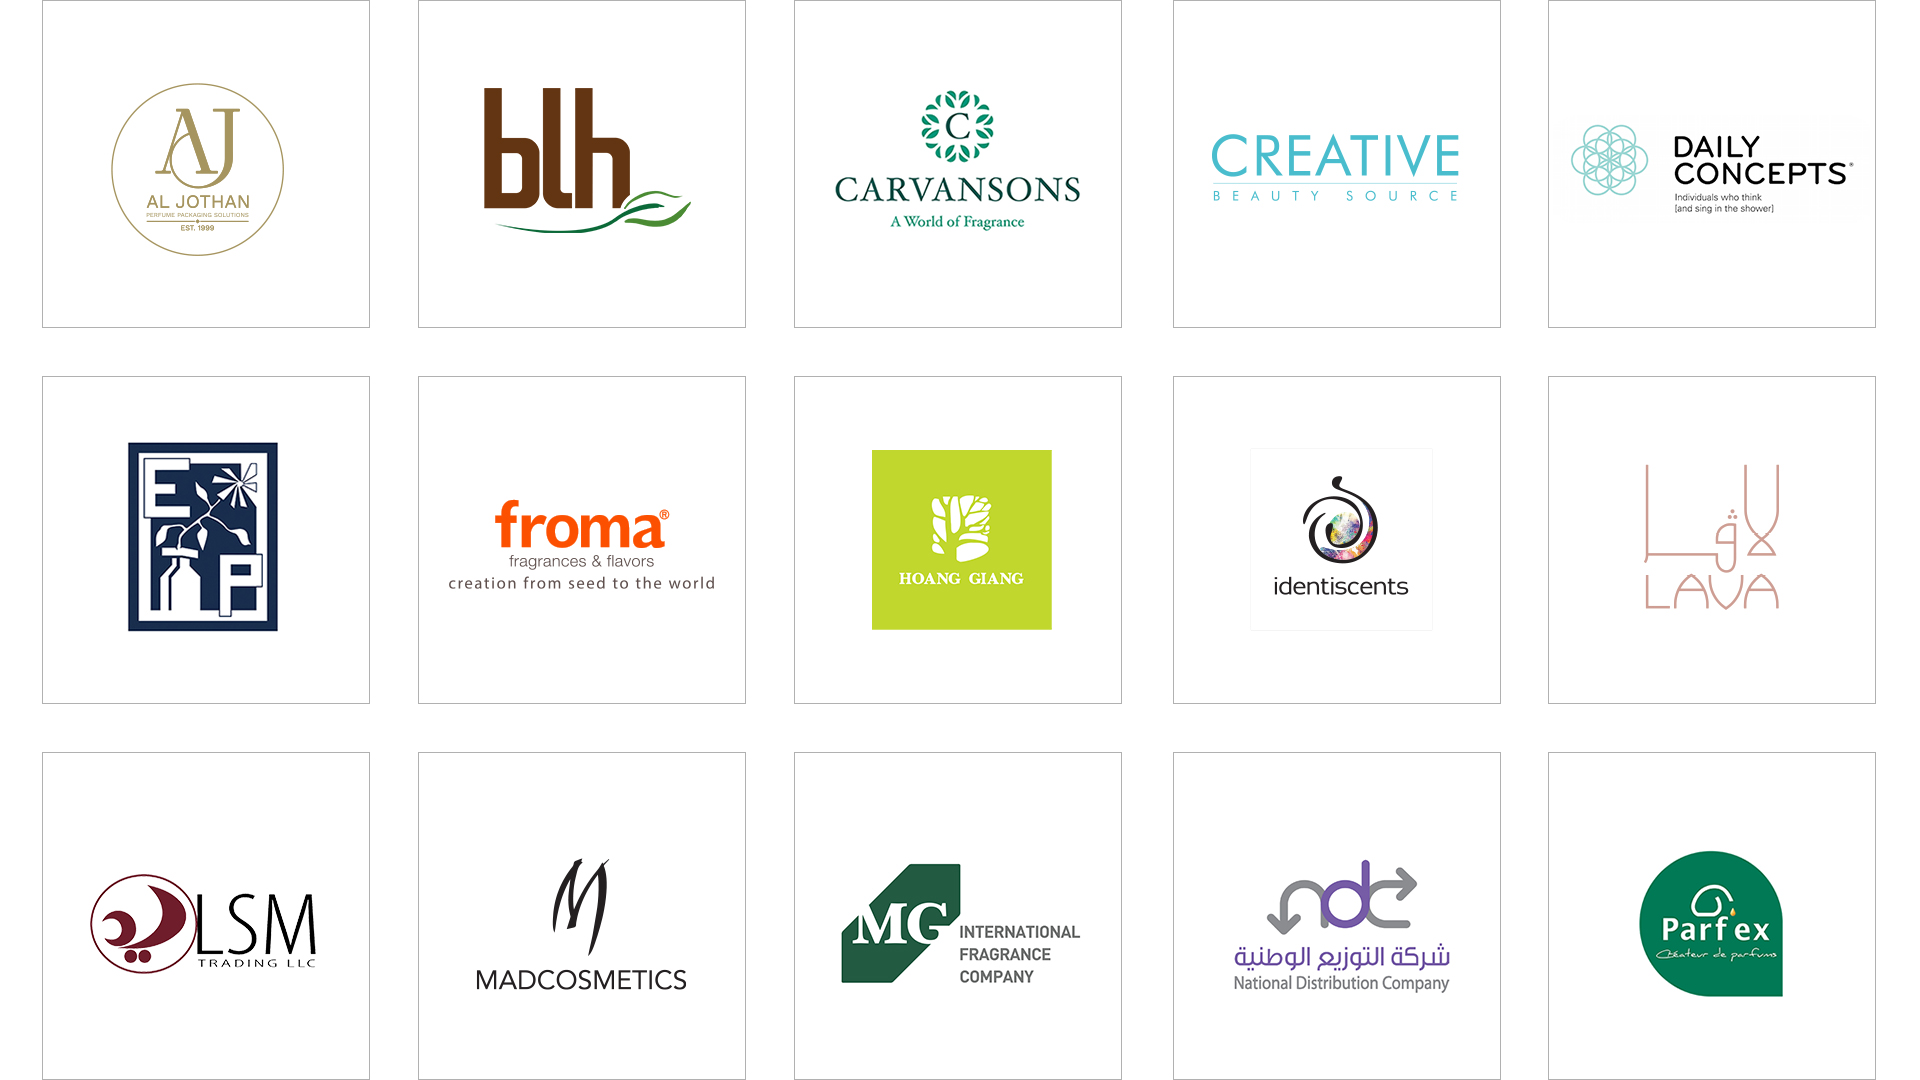 Beautyworld Saudi Arabia - 2022 Featured exhibitors